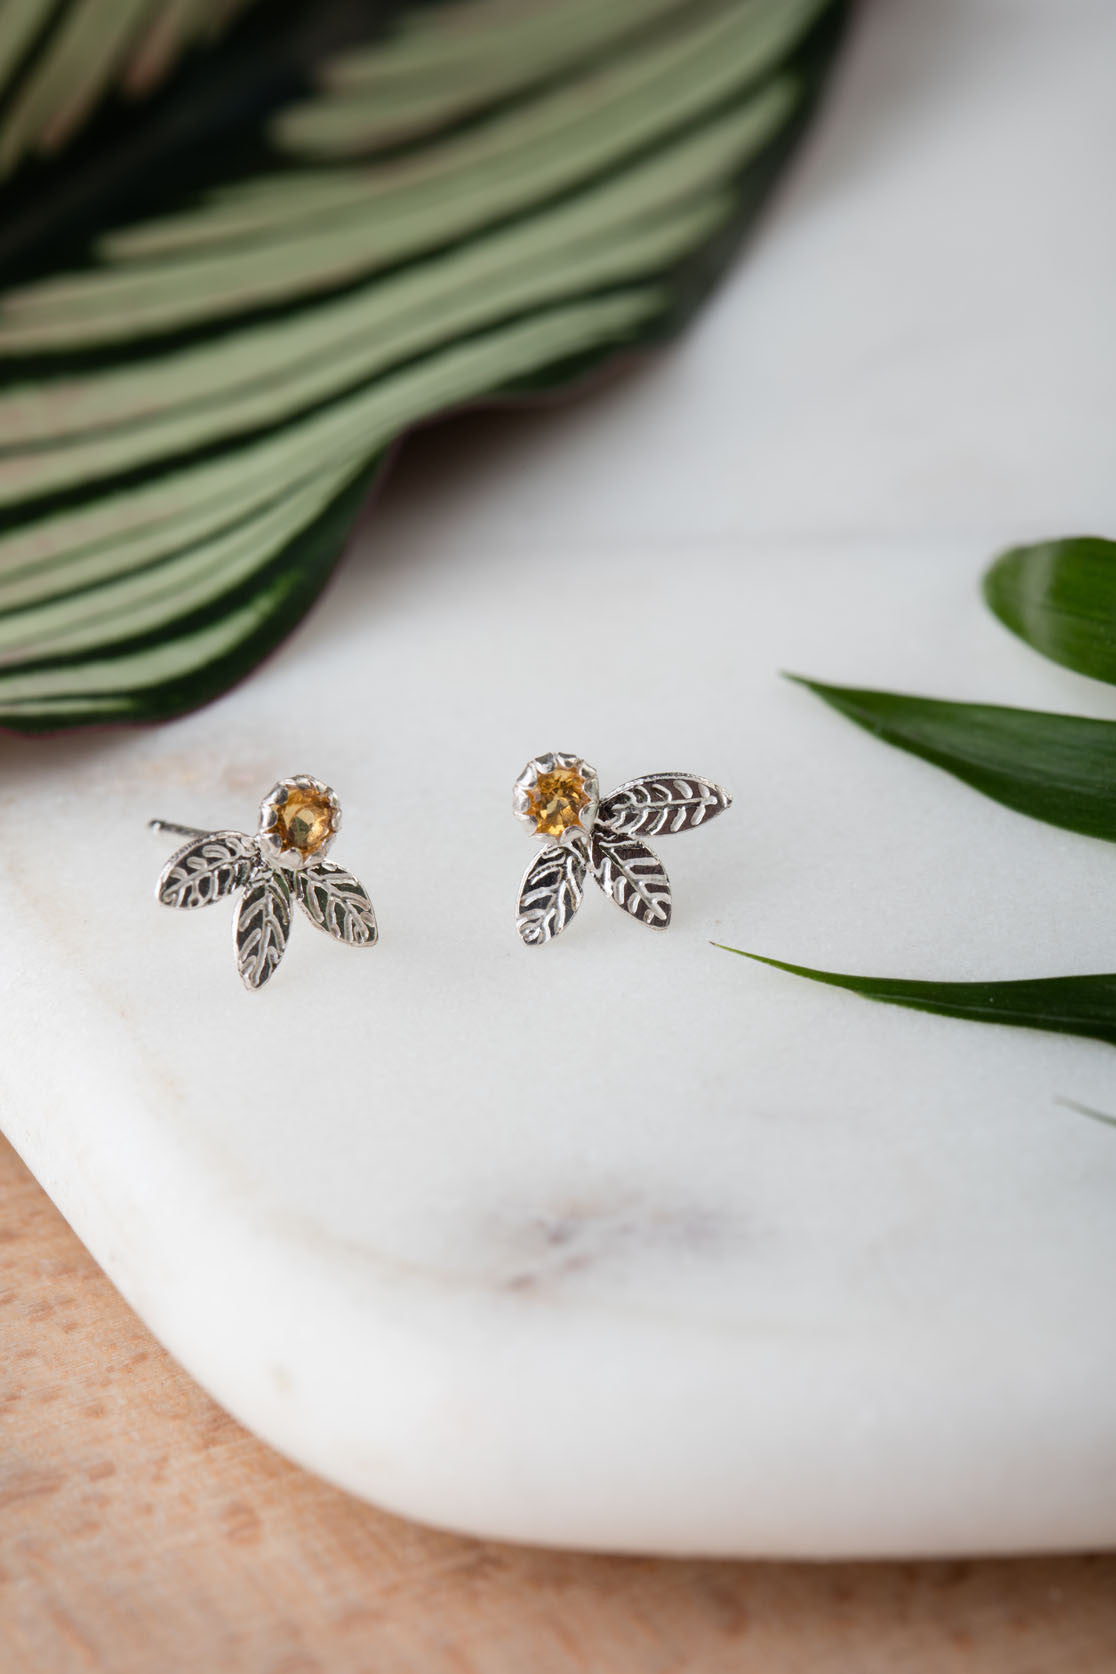 Triple leaf stud earrings